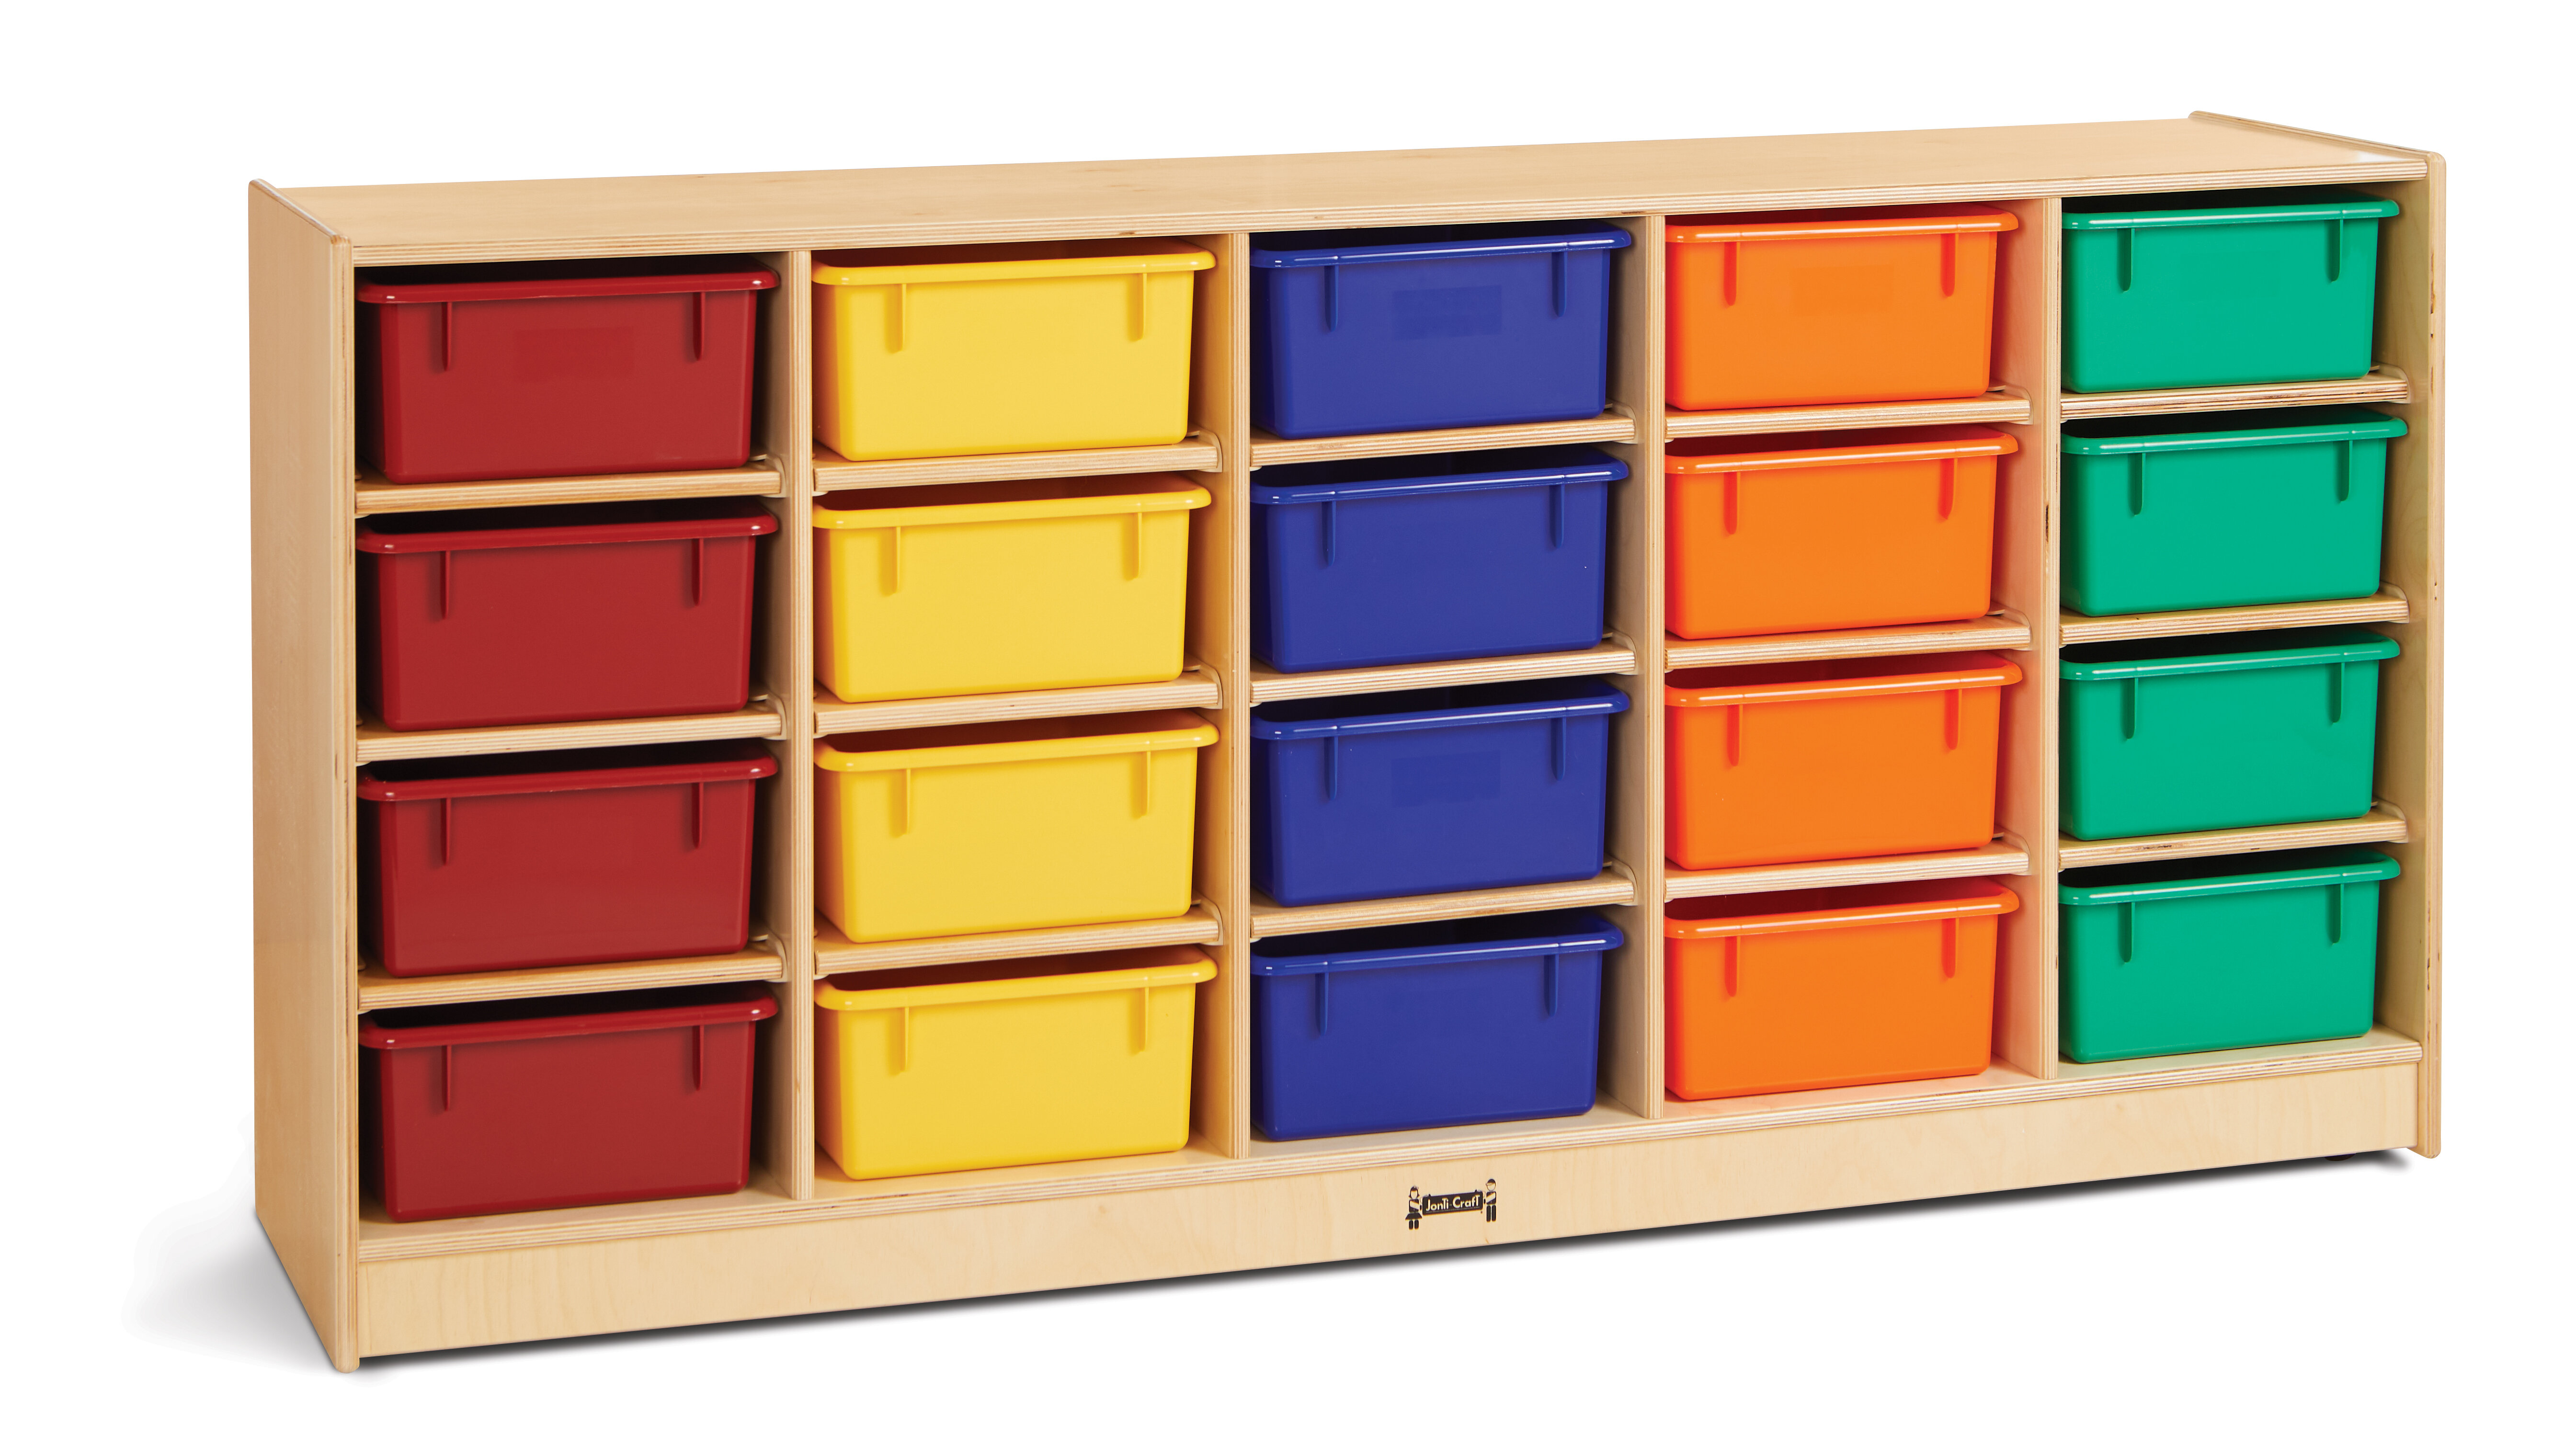 CLASSROOM ORGANIZER 20 bins and 20 slots by Jonti-Craft